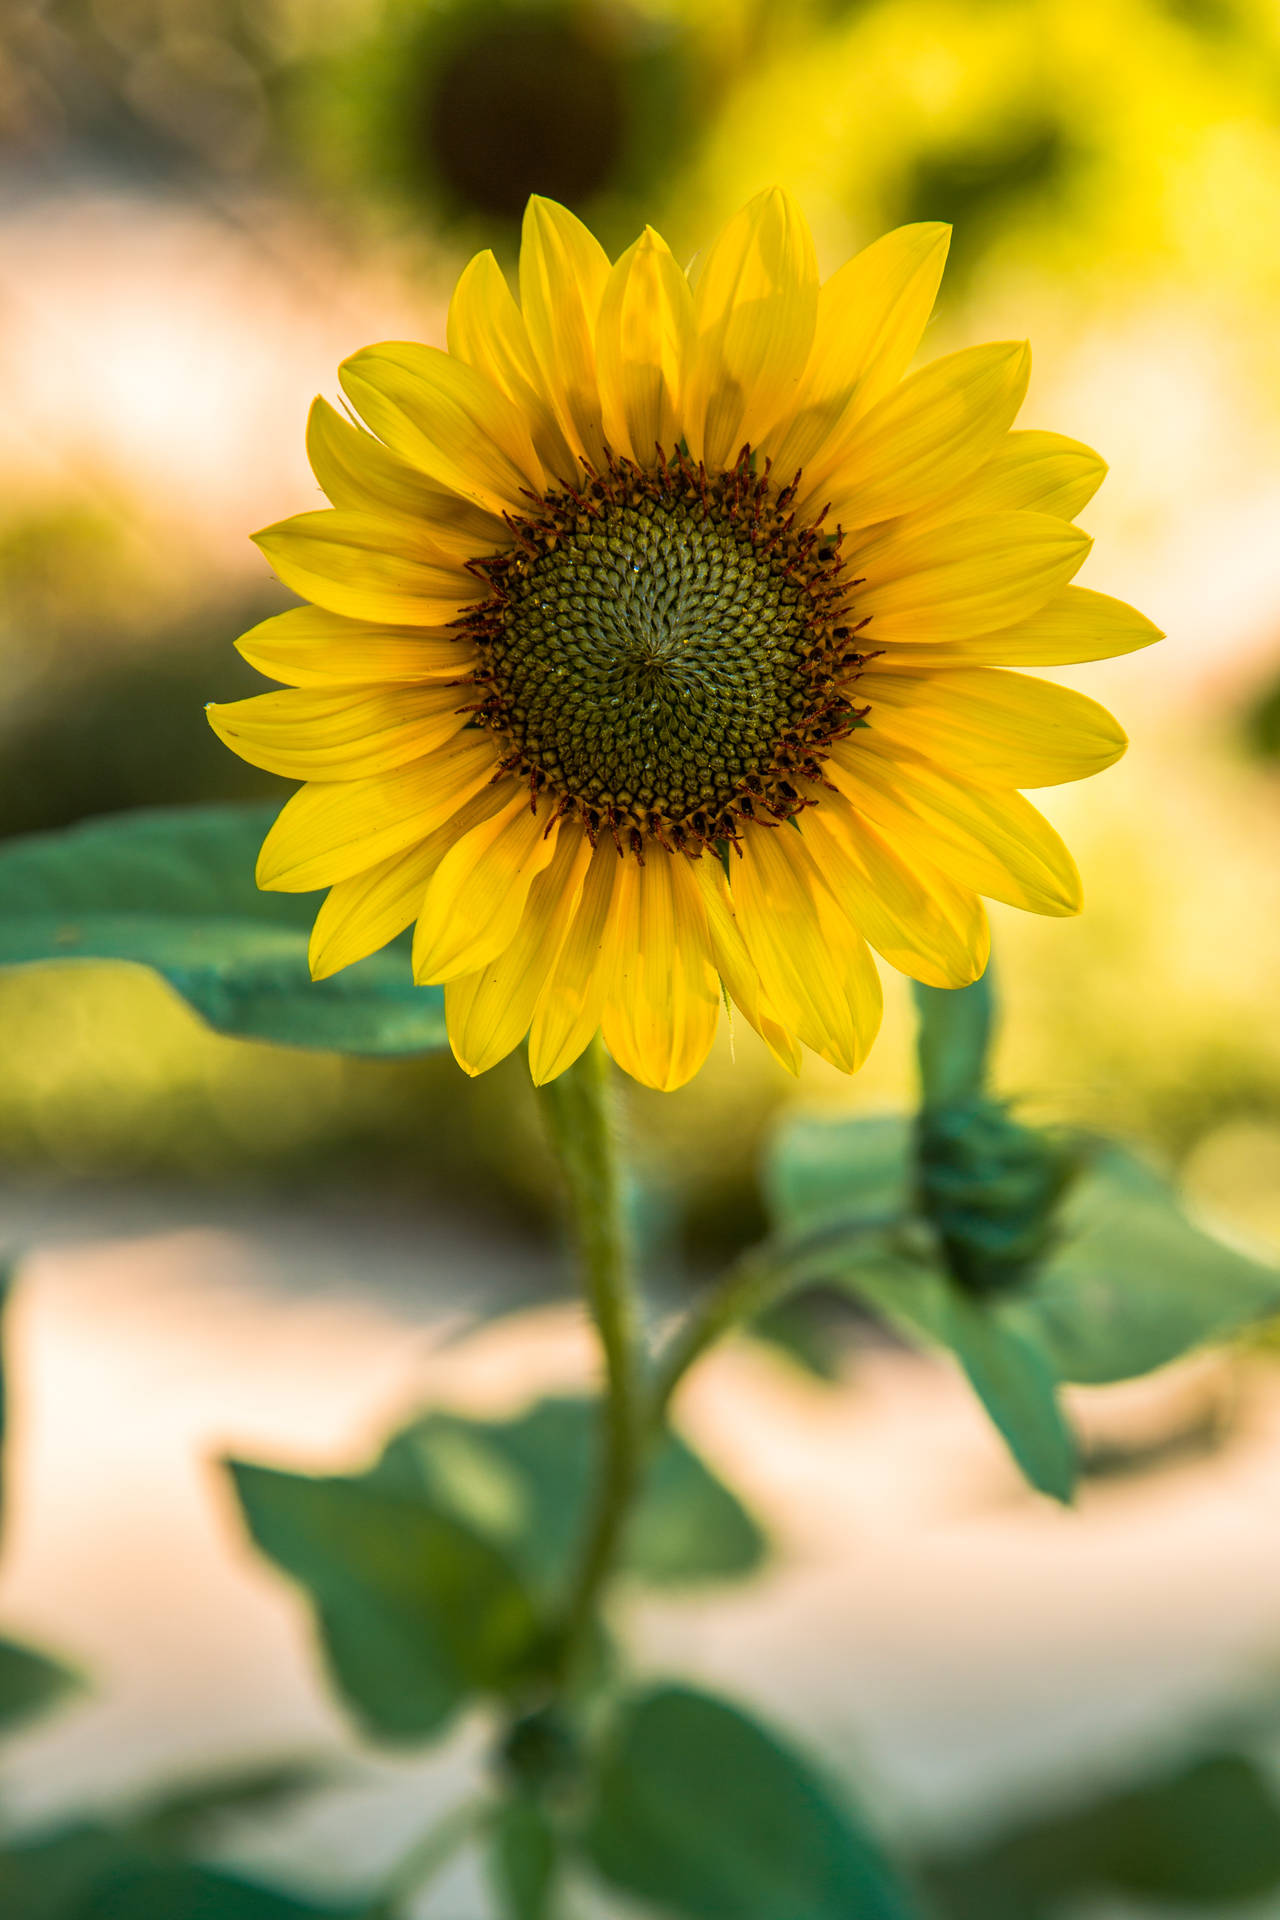 "A Close-Up of a Bright Sunflower Under the Sun" Wallpaper